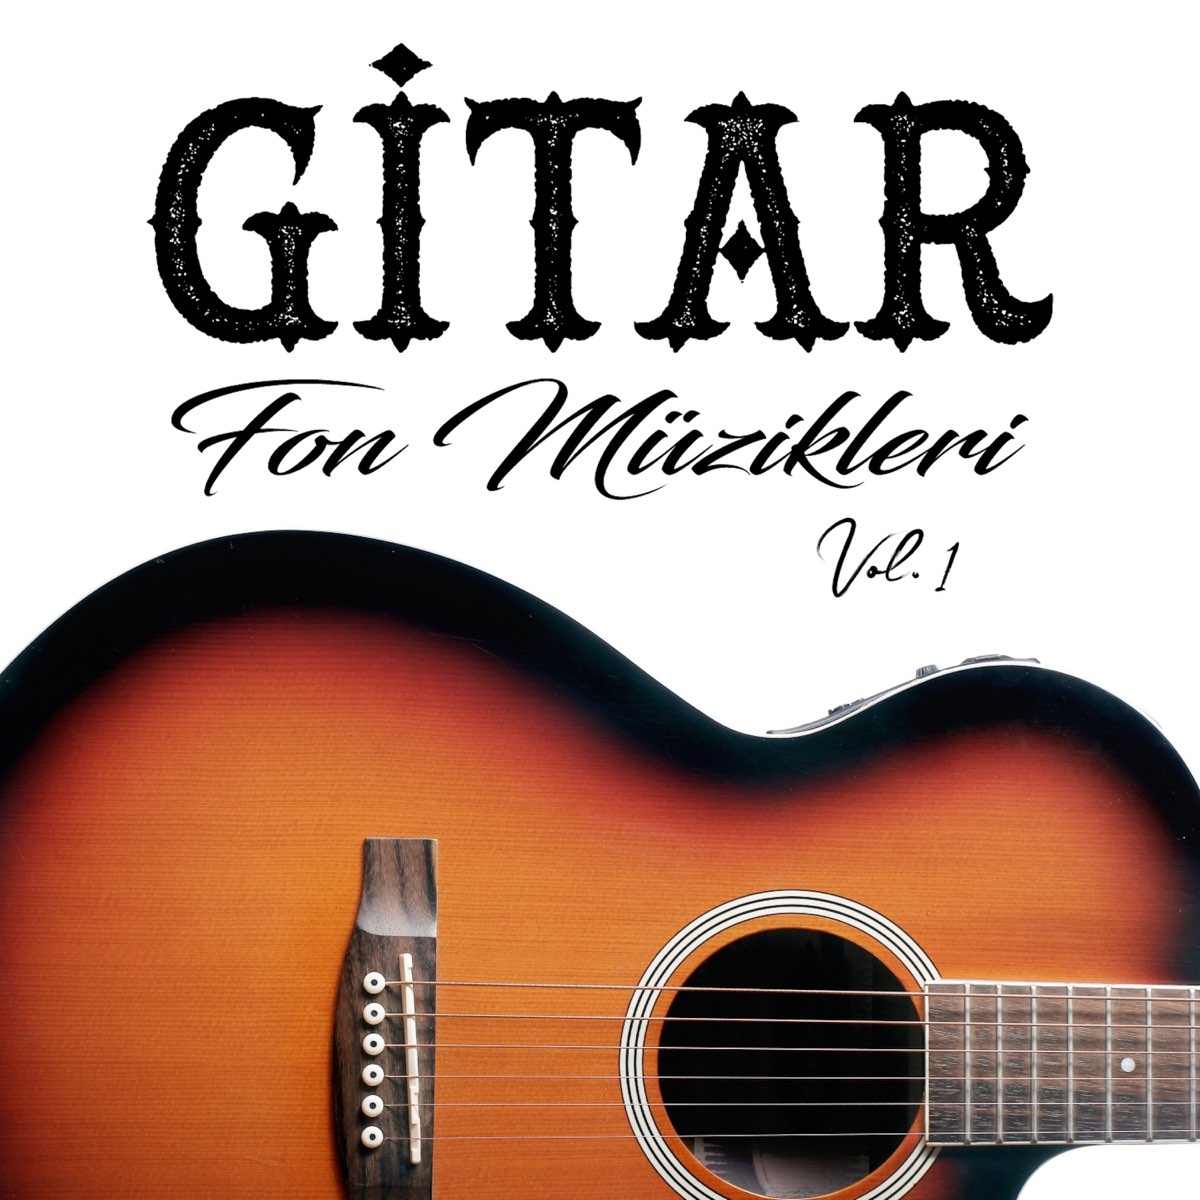 Gitar Fon Müzikleri Vol.1 - Album by Burak Nayma - Apple Music